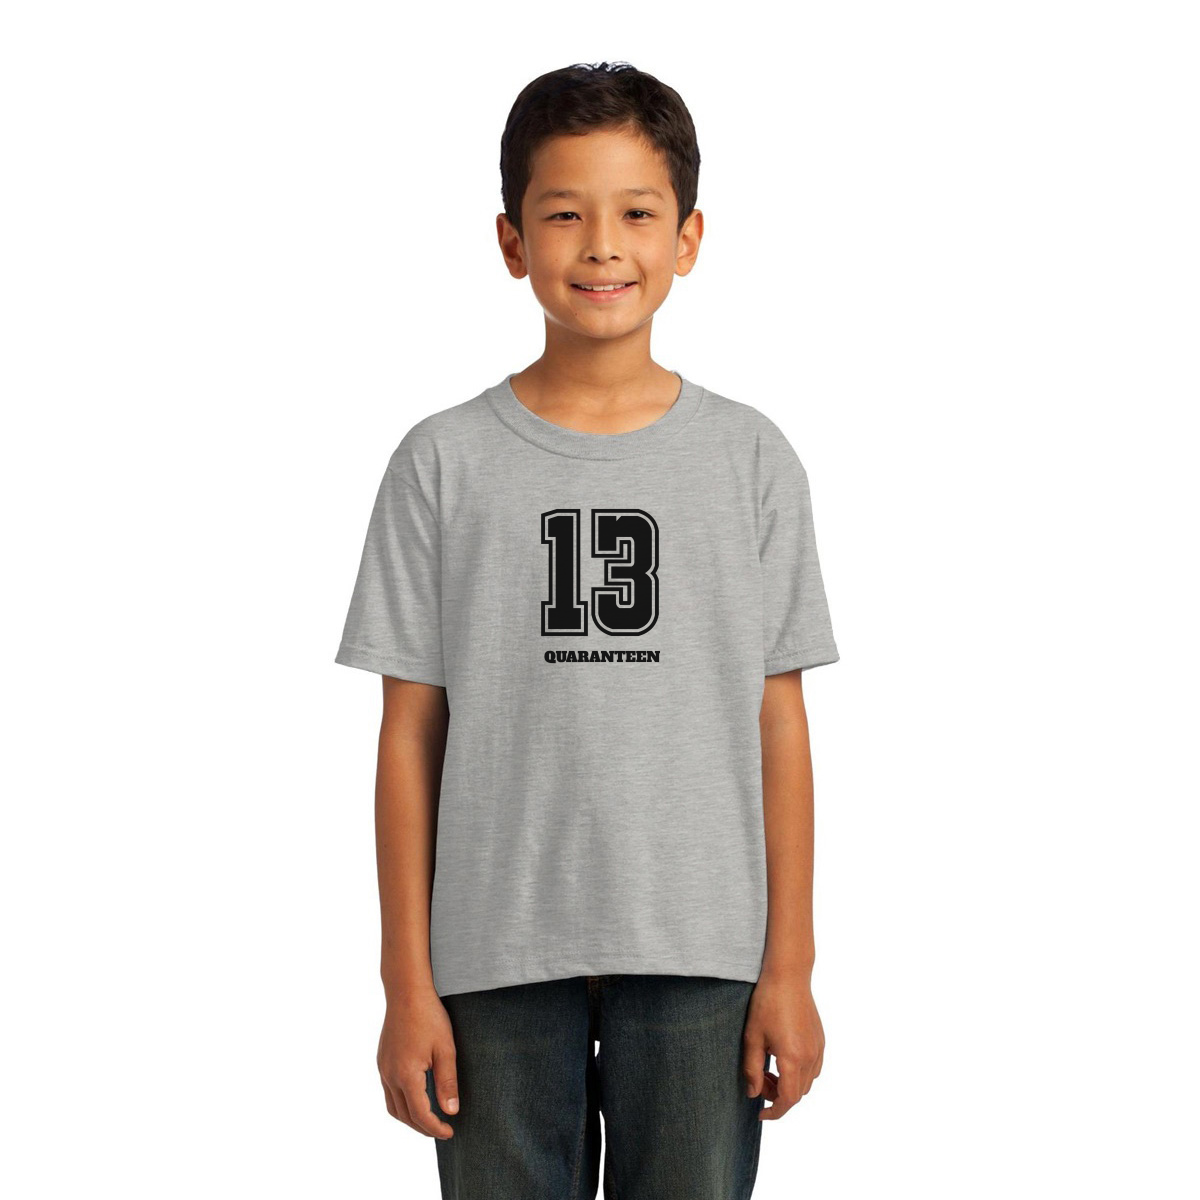 13 QUARANTEEN Kids T-shirt | Gray